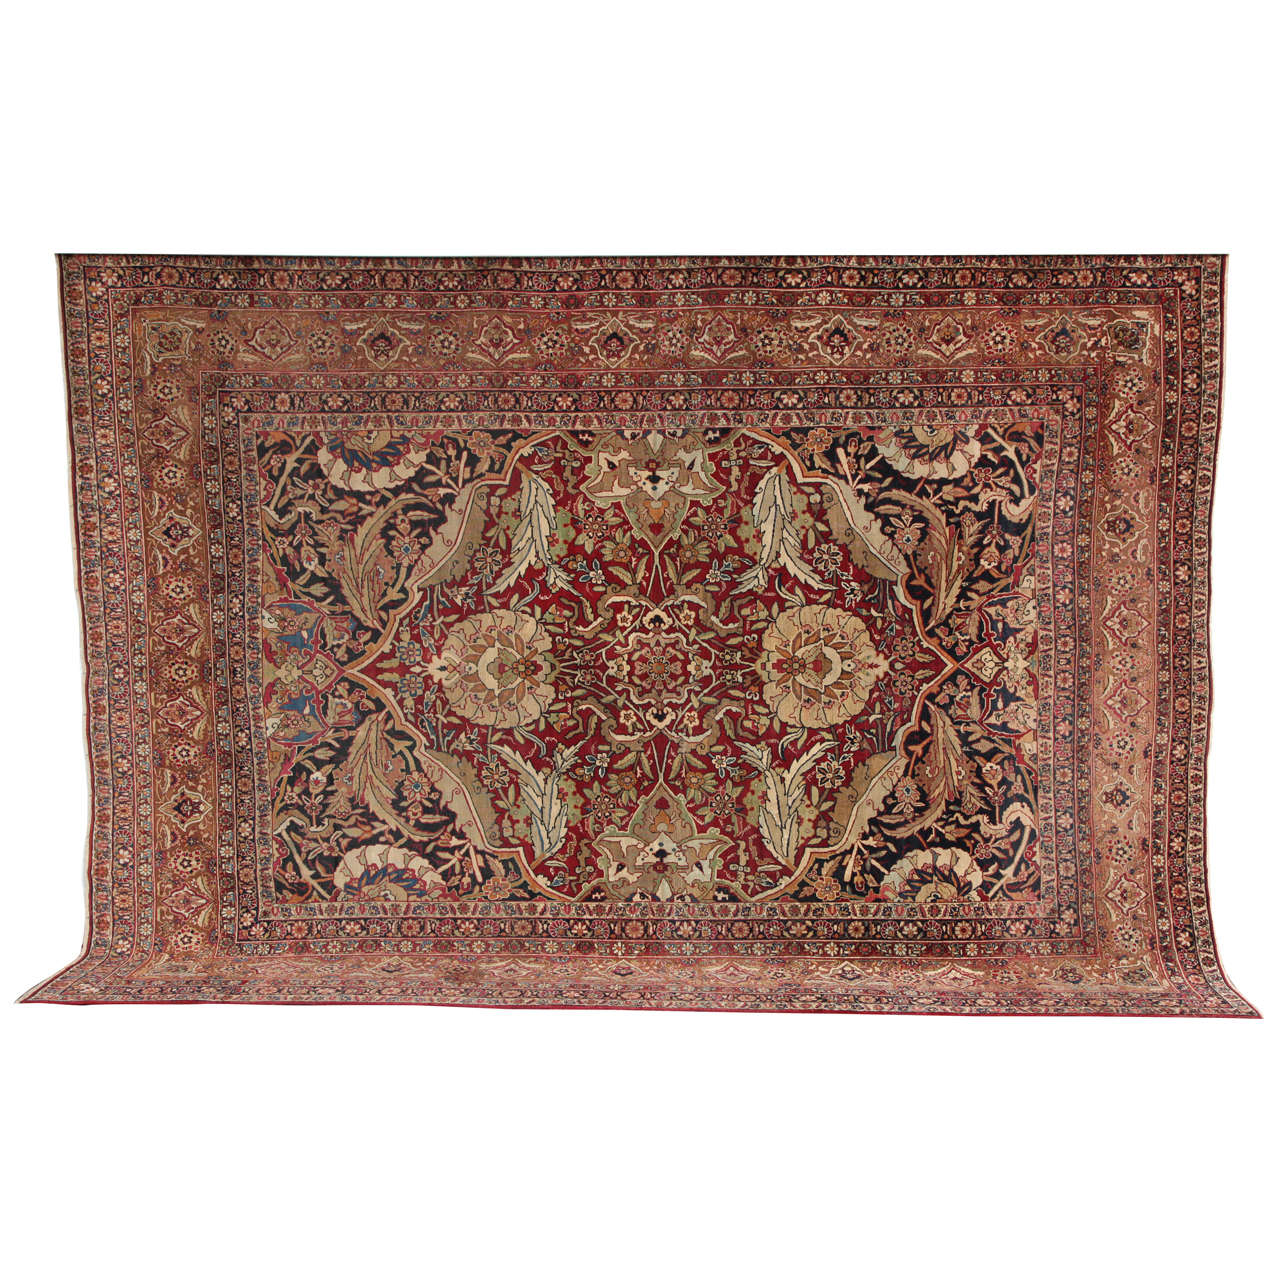 Antique 1890s Persian Kermanshah Rug, Wool, 9' x 12'